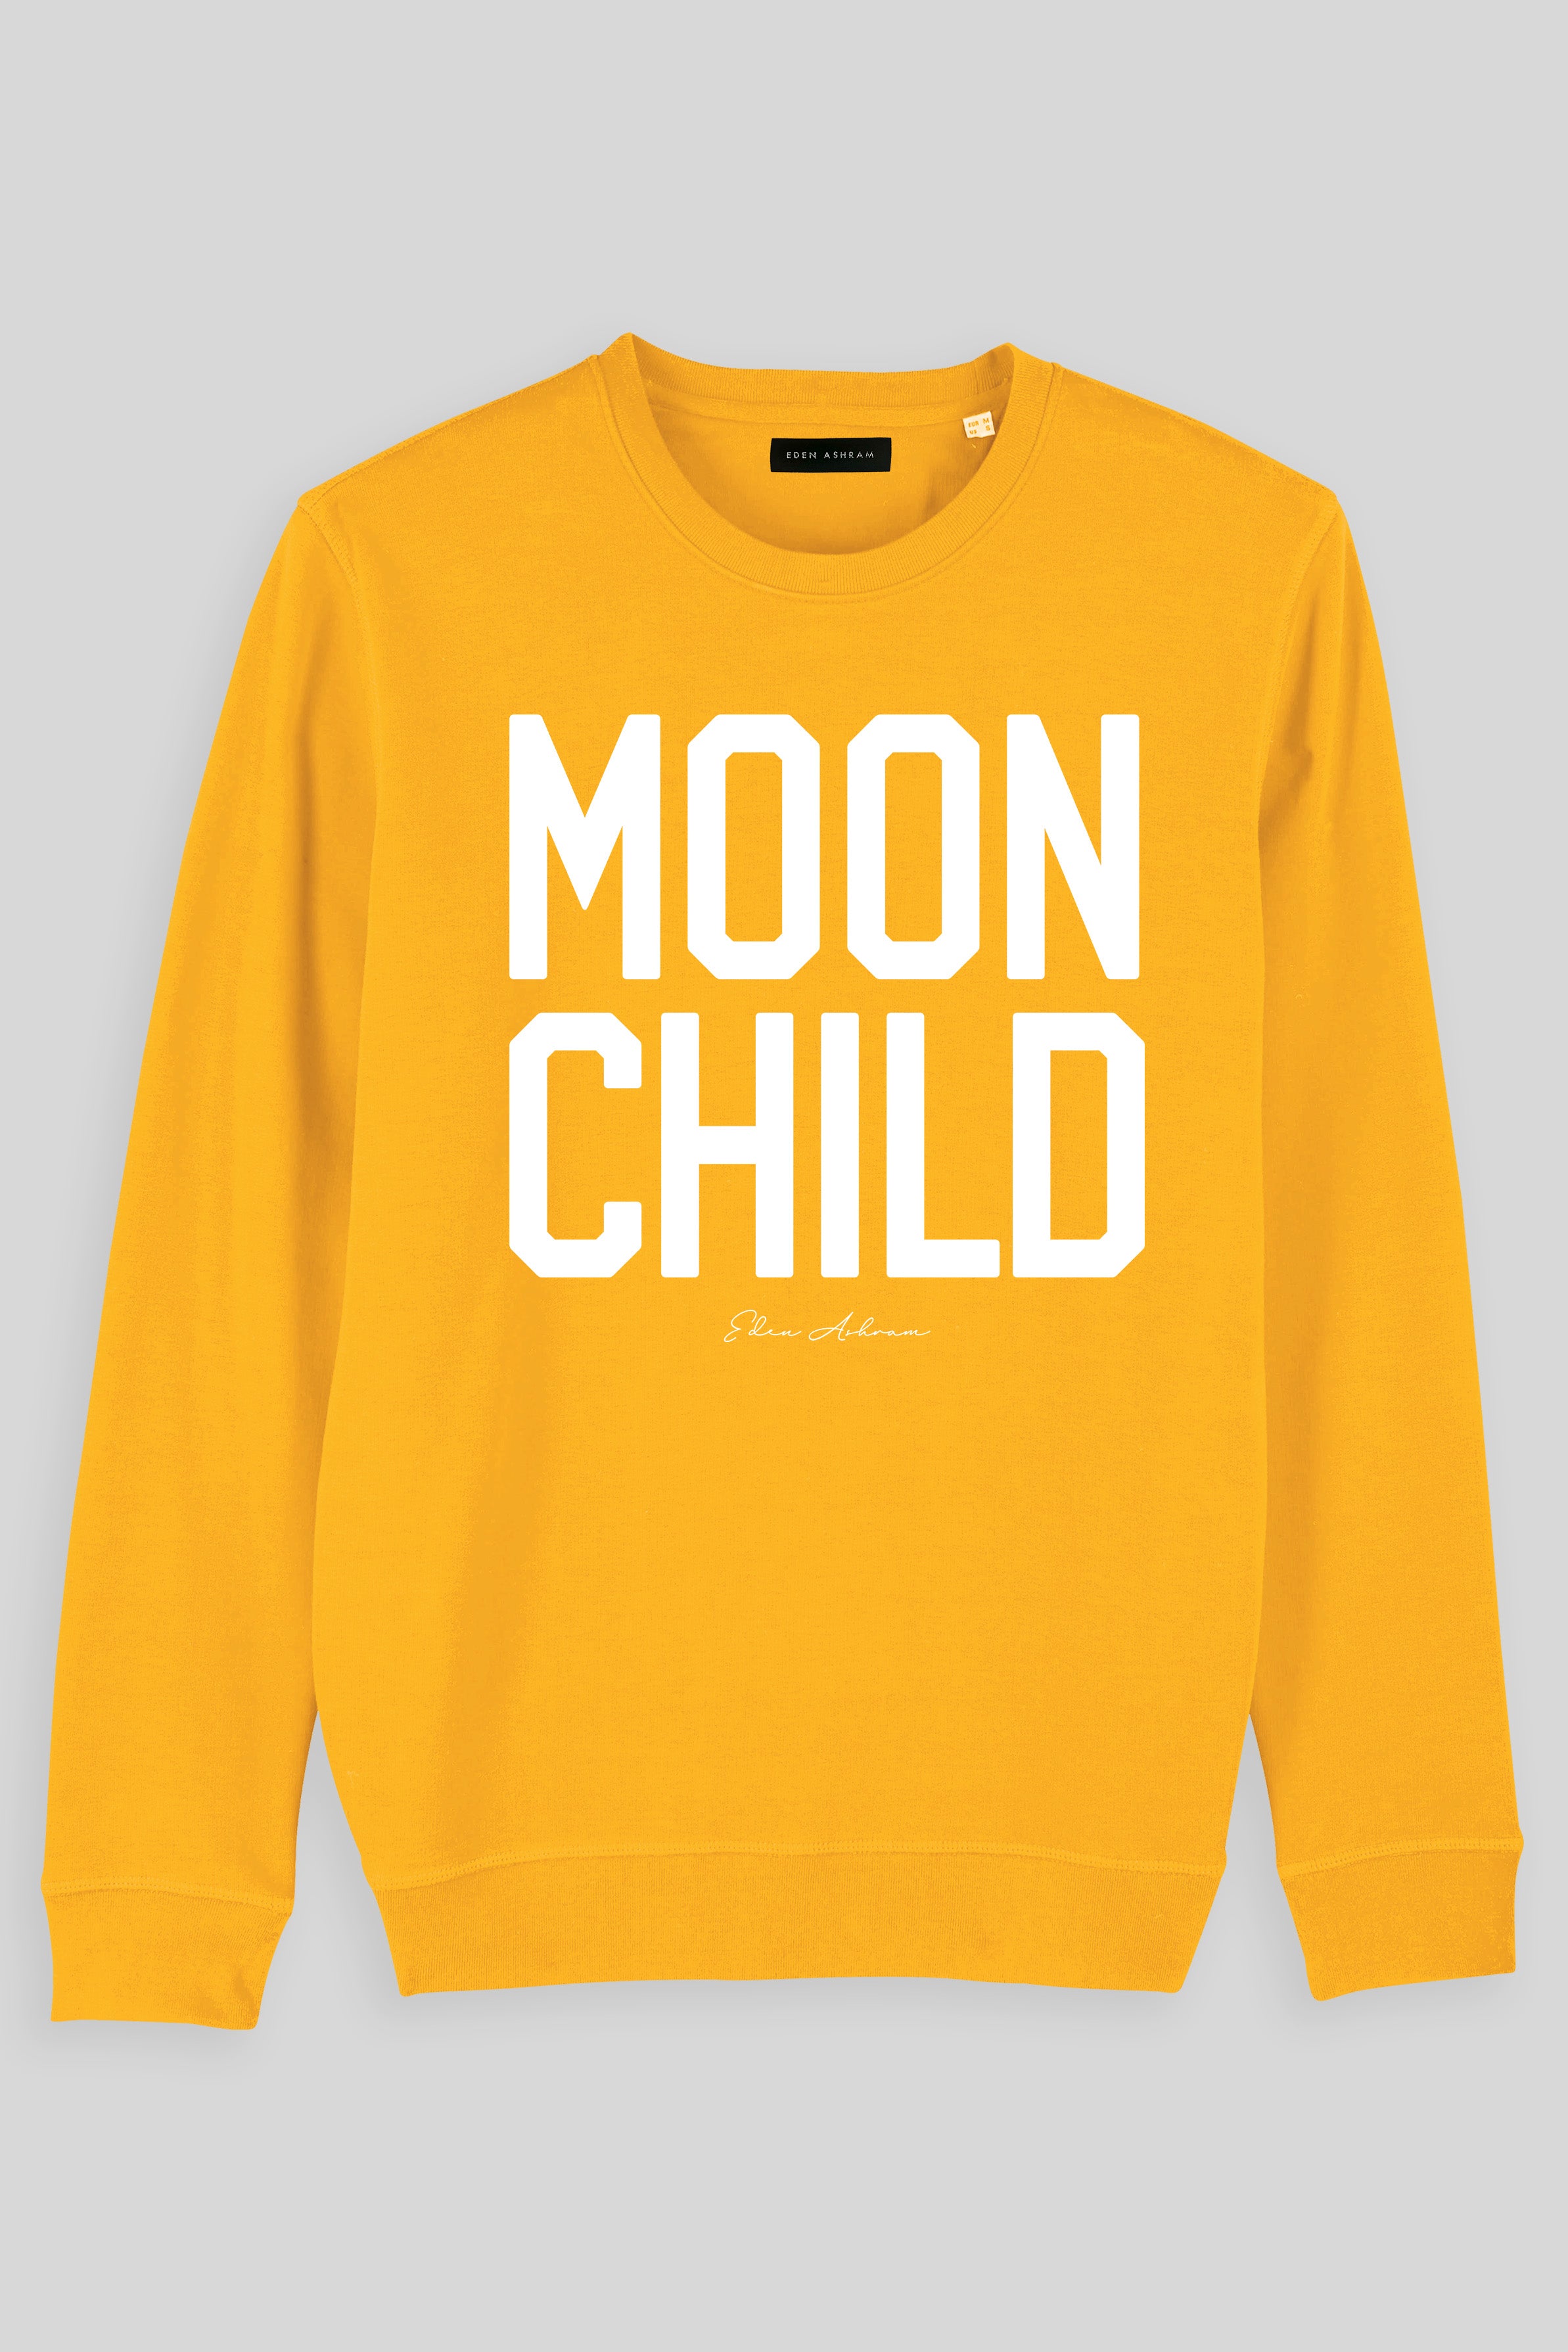 Eden Ashram Moon Child Premium Crew Neck Sweatshirt Spectra Yellow